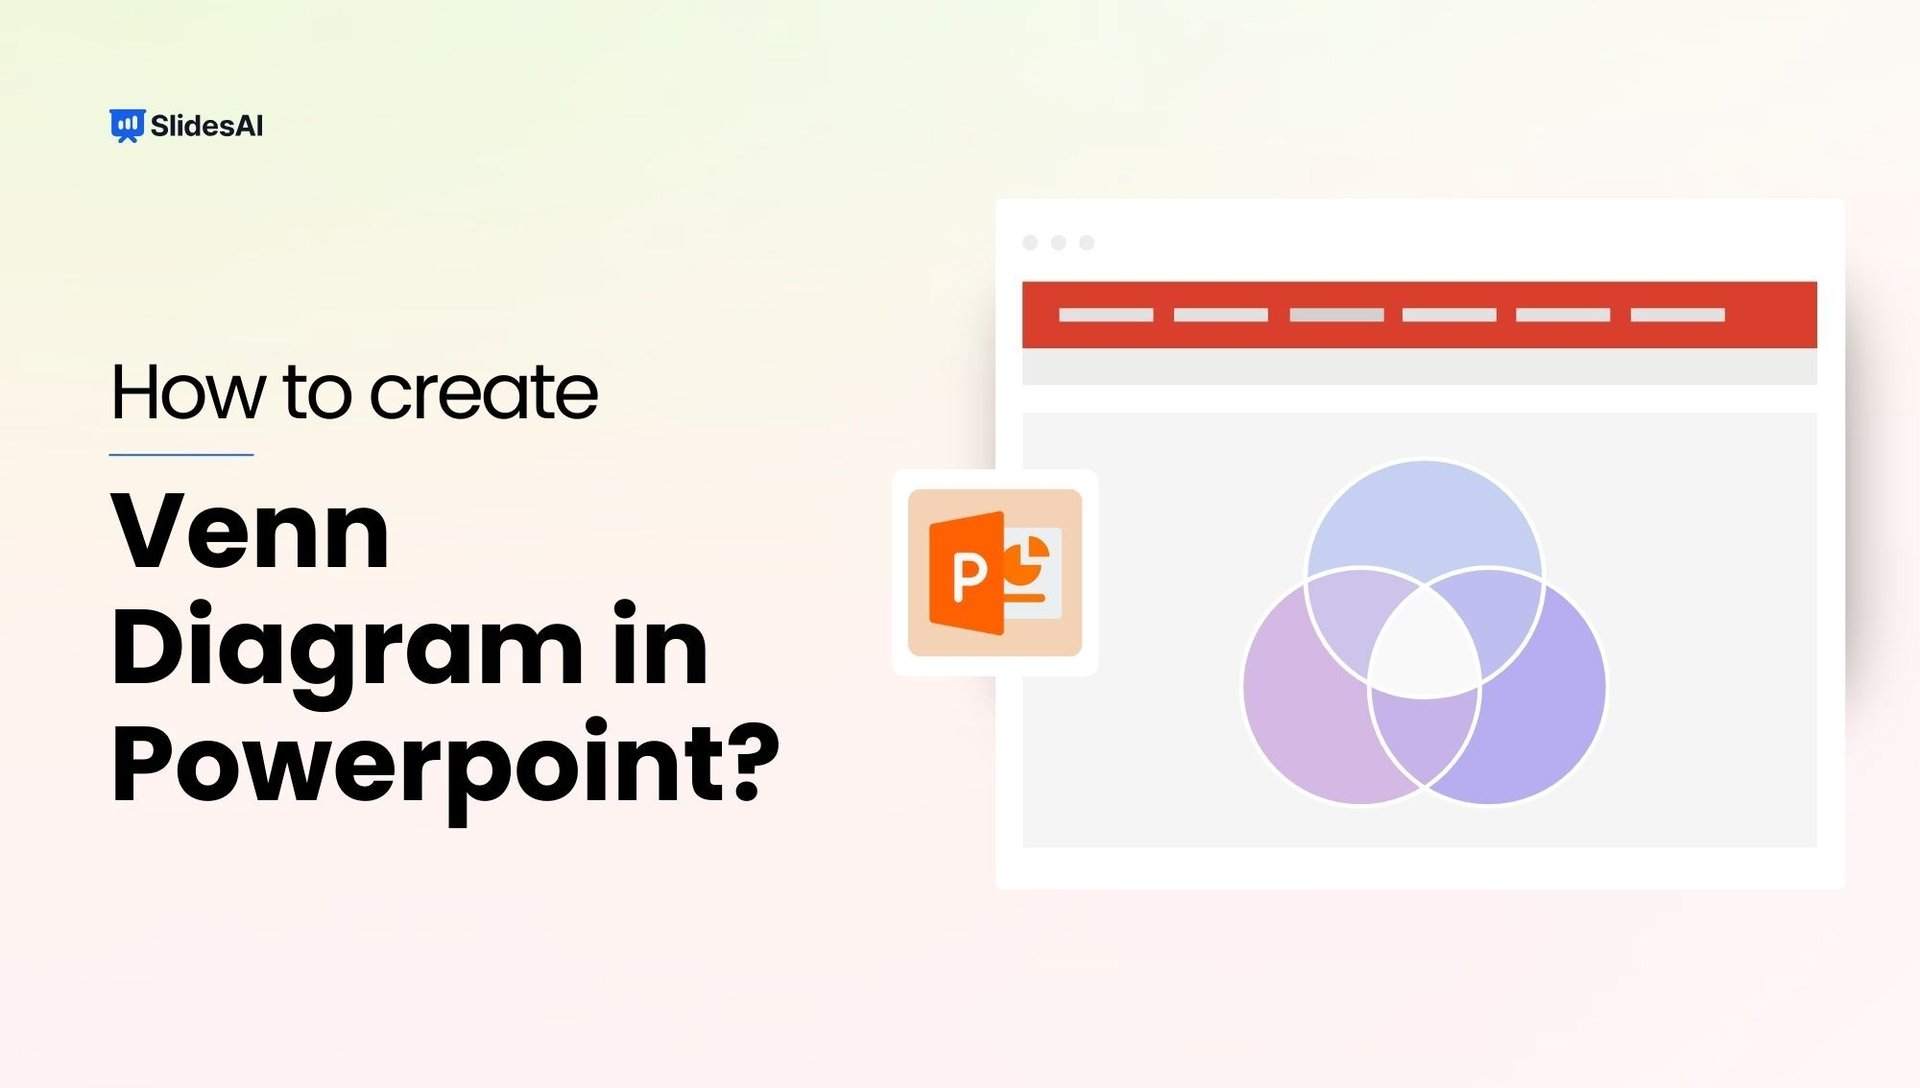 Creating Venn Diagram in PowerPoint: Step-by-step Guide